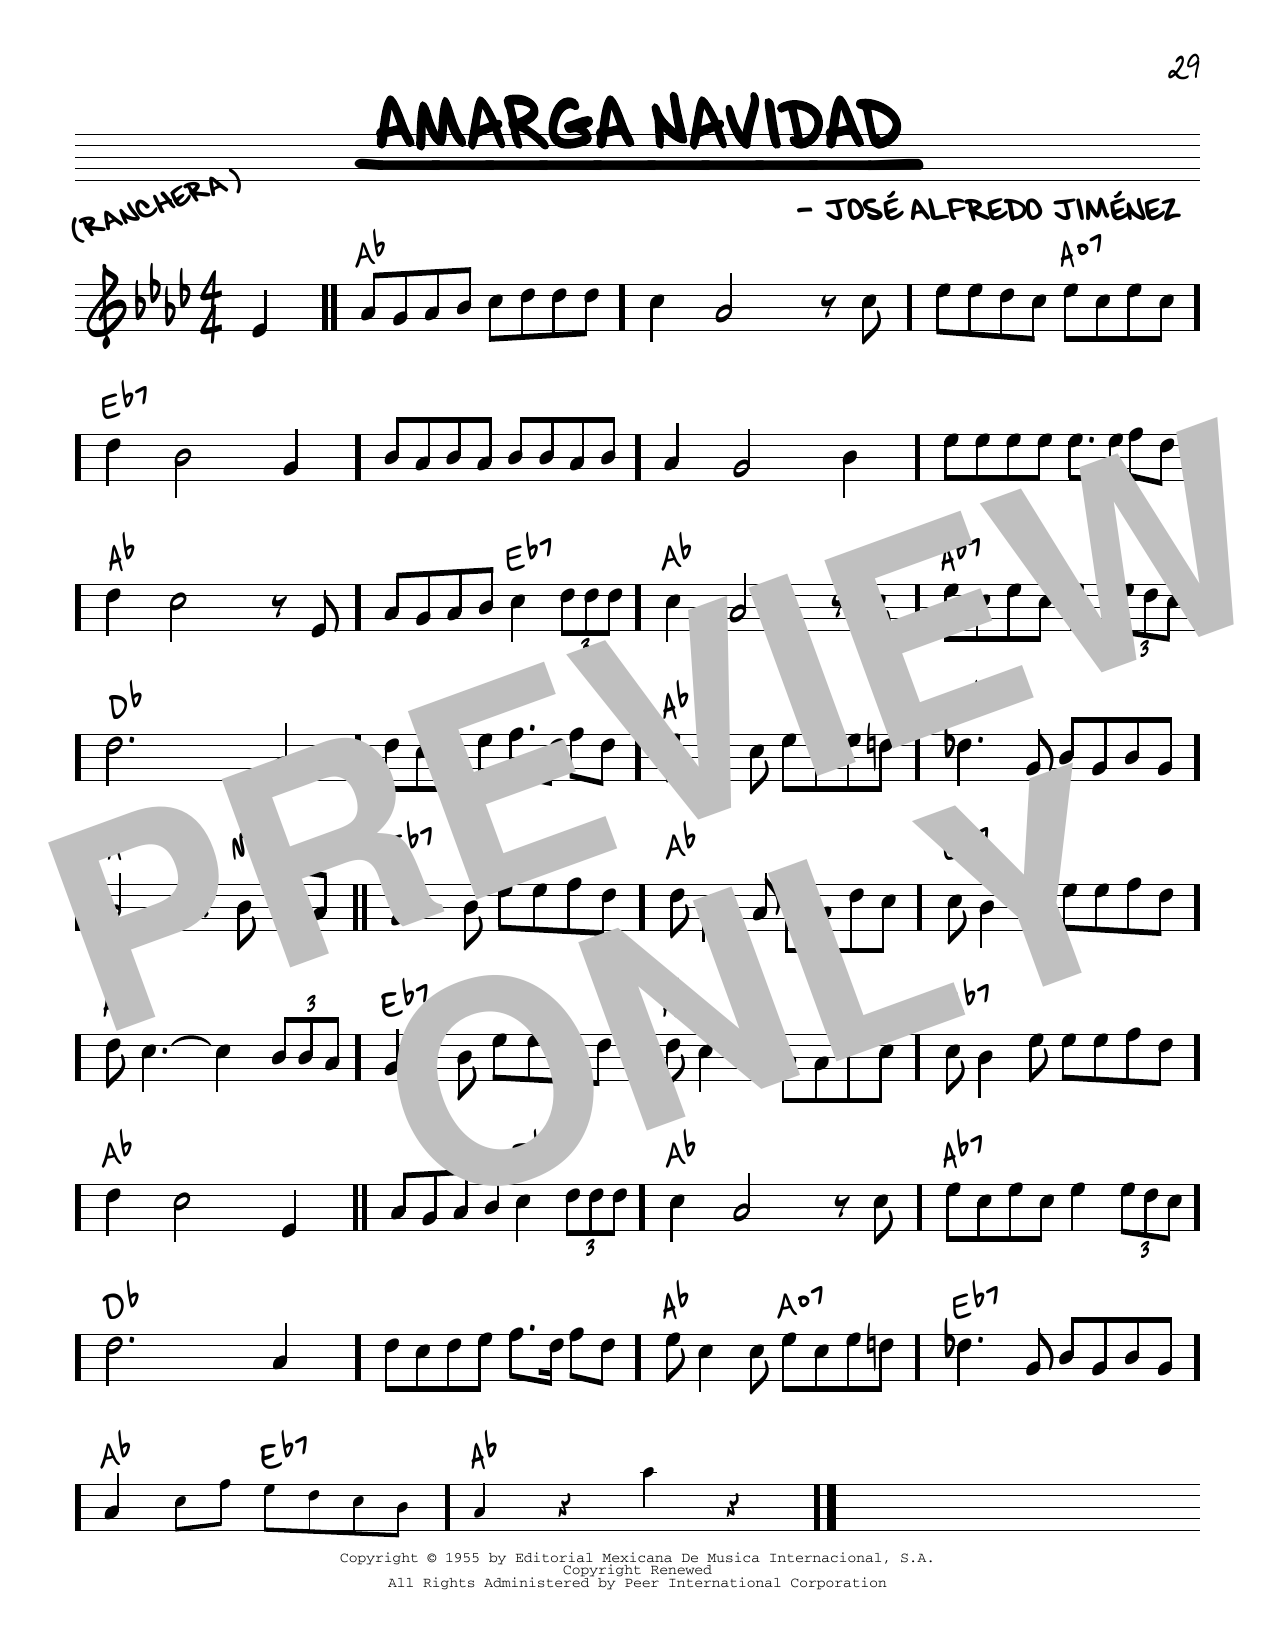 Jose Alfredo Jimenez Amarga Navidad Sheet Music Notes & Chords for Real Book – Melody & Chords - Download or Print PDF